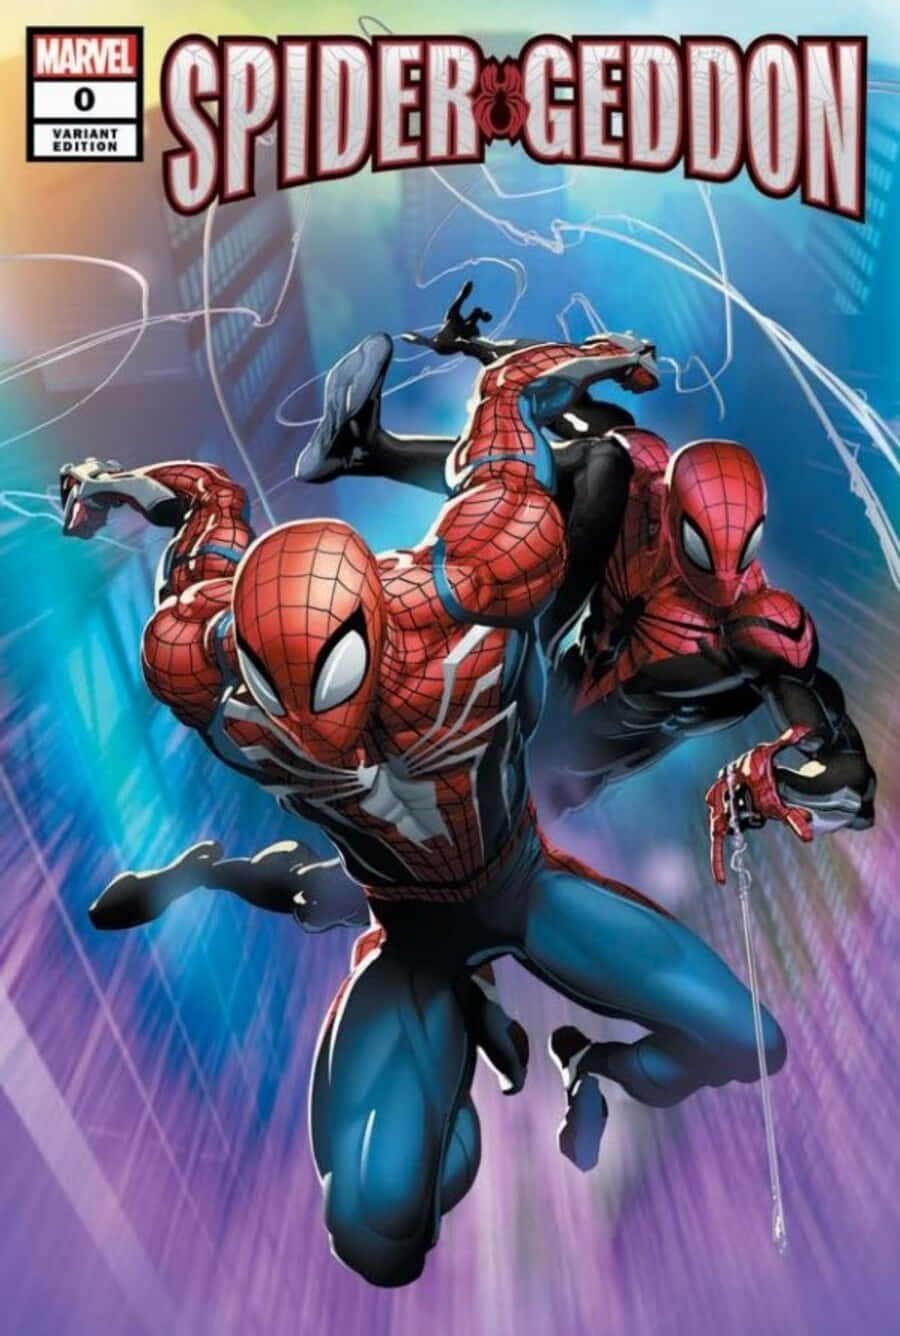 Spider-Geddon Unleashed - The Ultimate Spider-Man Team-up Wallpaper